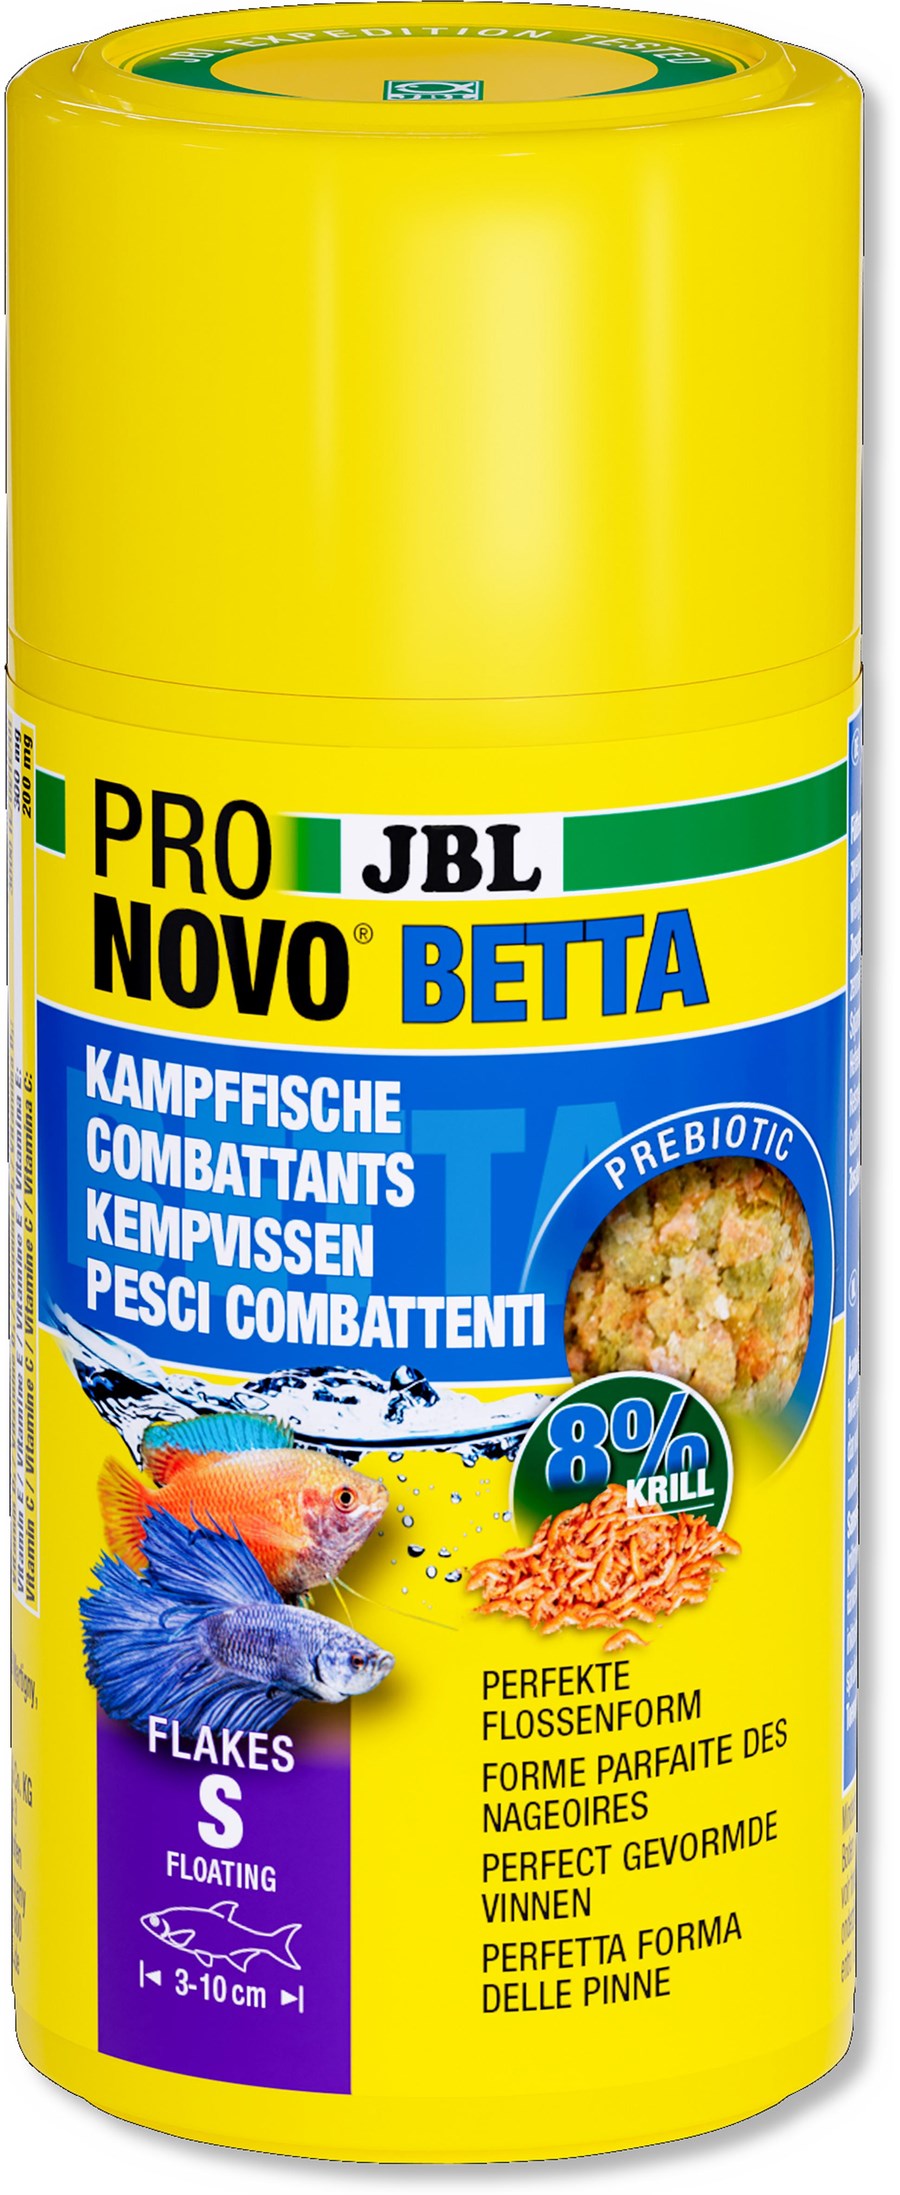 JBL PRONOVO BETTA FLAKES S 100ml +